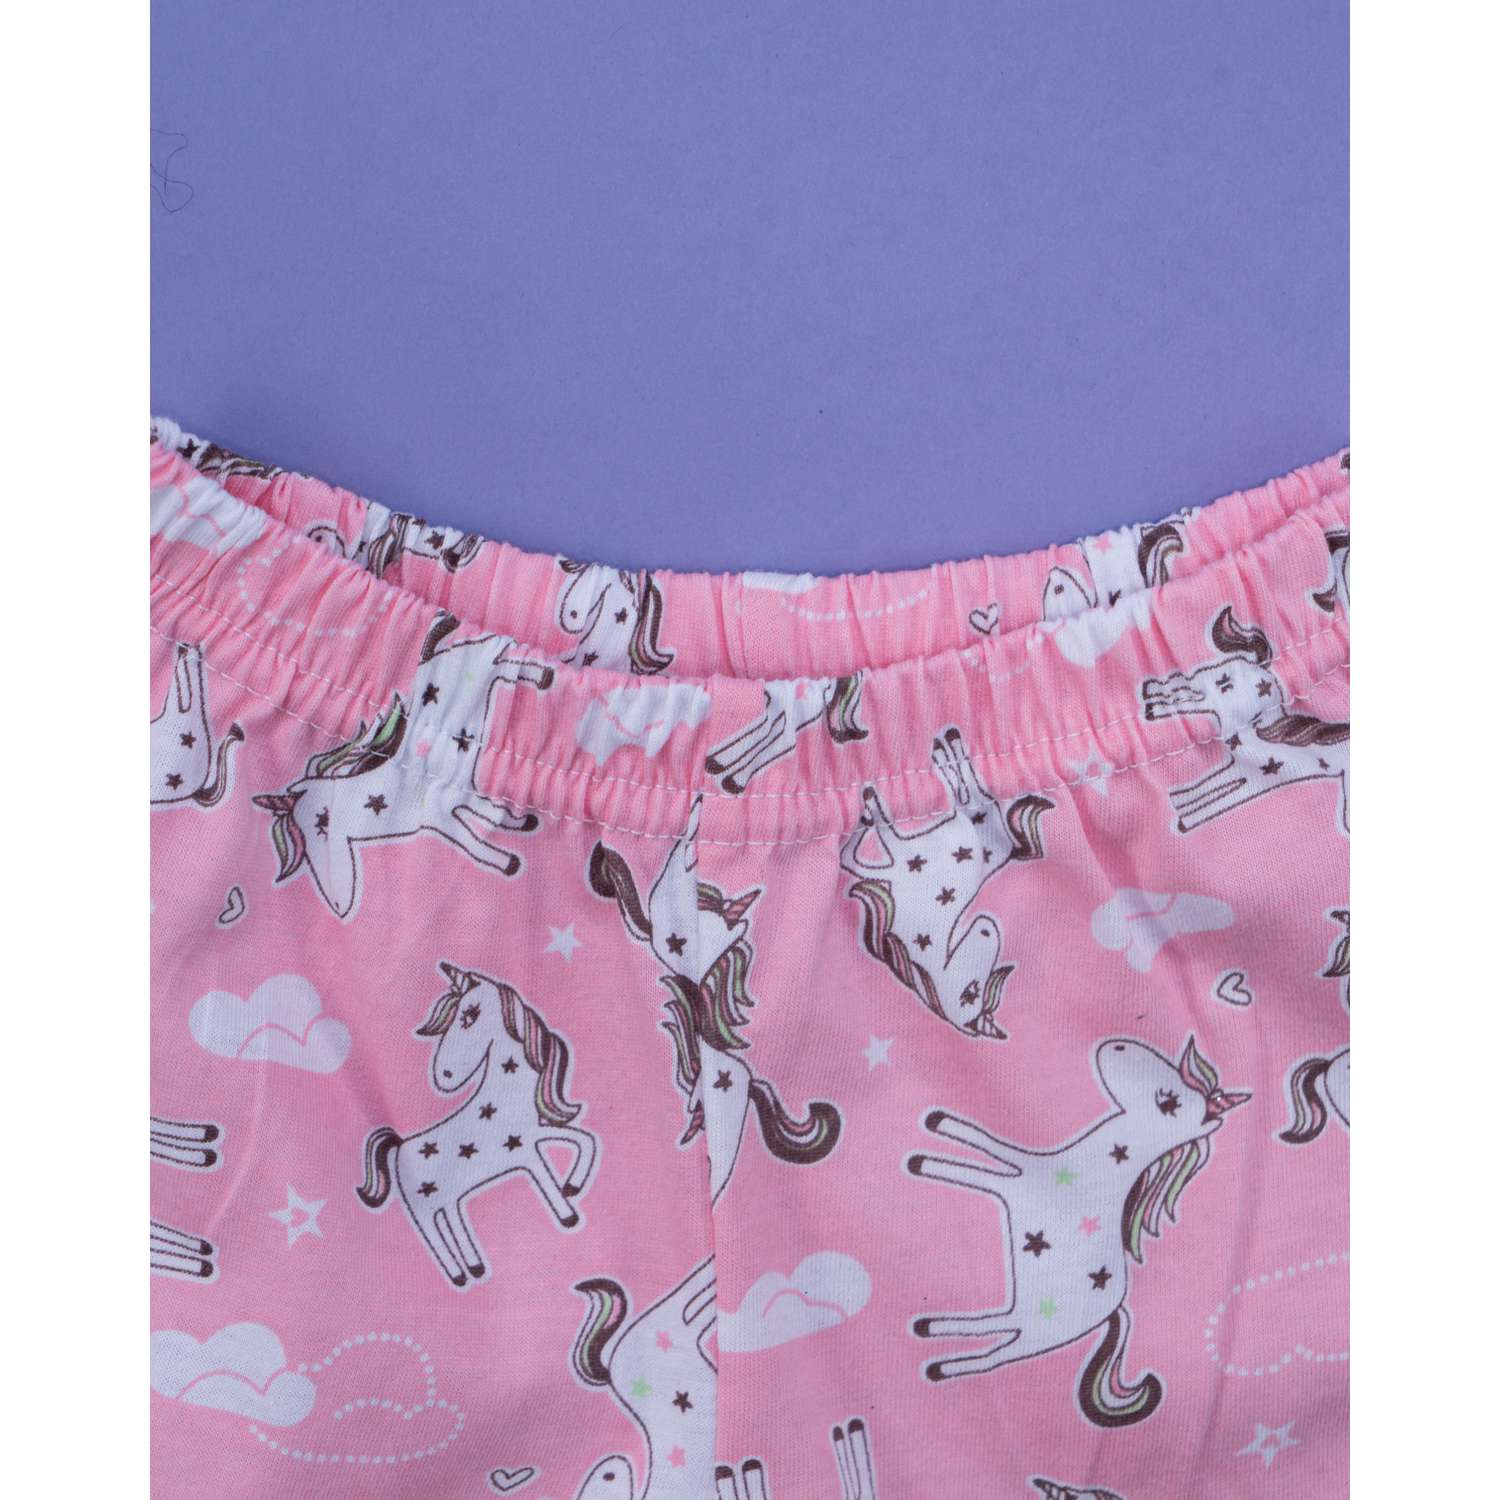 Пижама Babycollection 603/pjm004/3/sph/k1/001/p1/W*dбелый розовый - фото 11